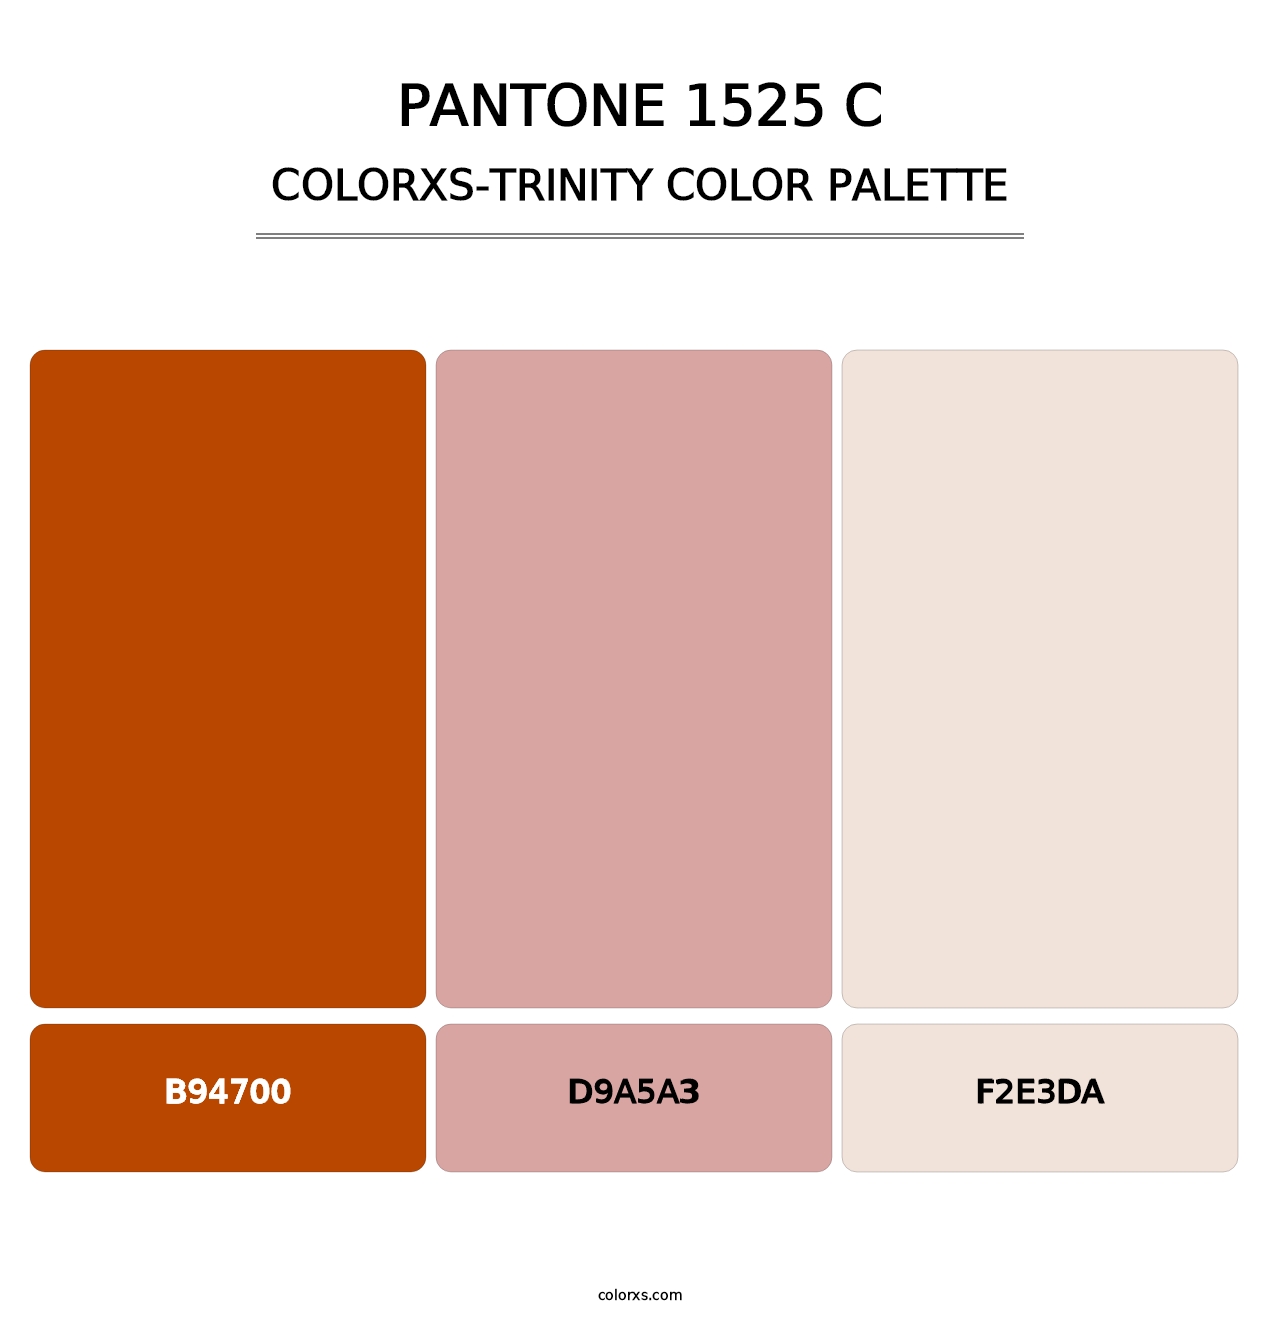 PANTONE 1525 C - Colorxs Trinity Palette